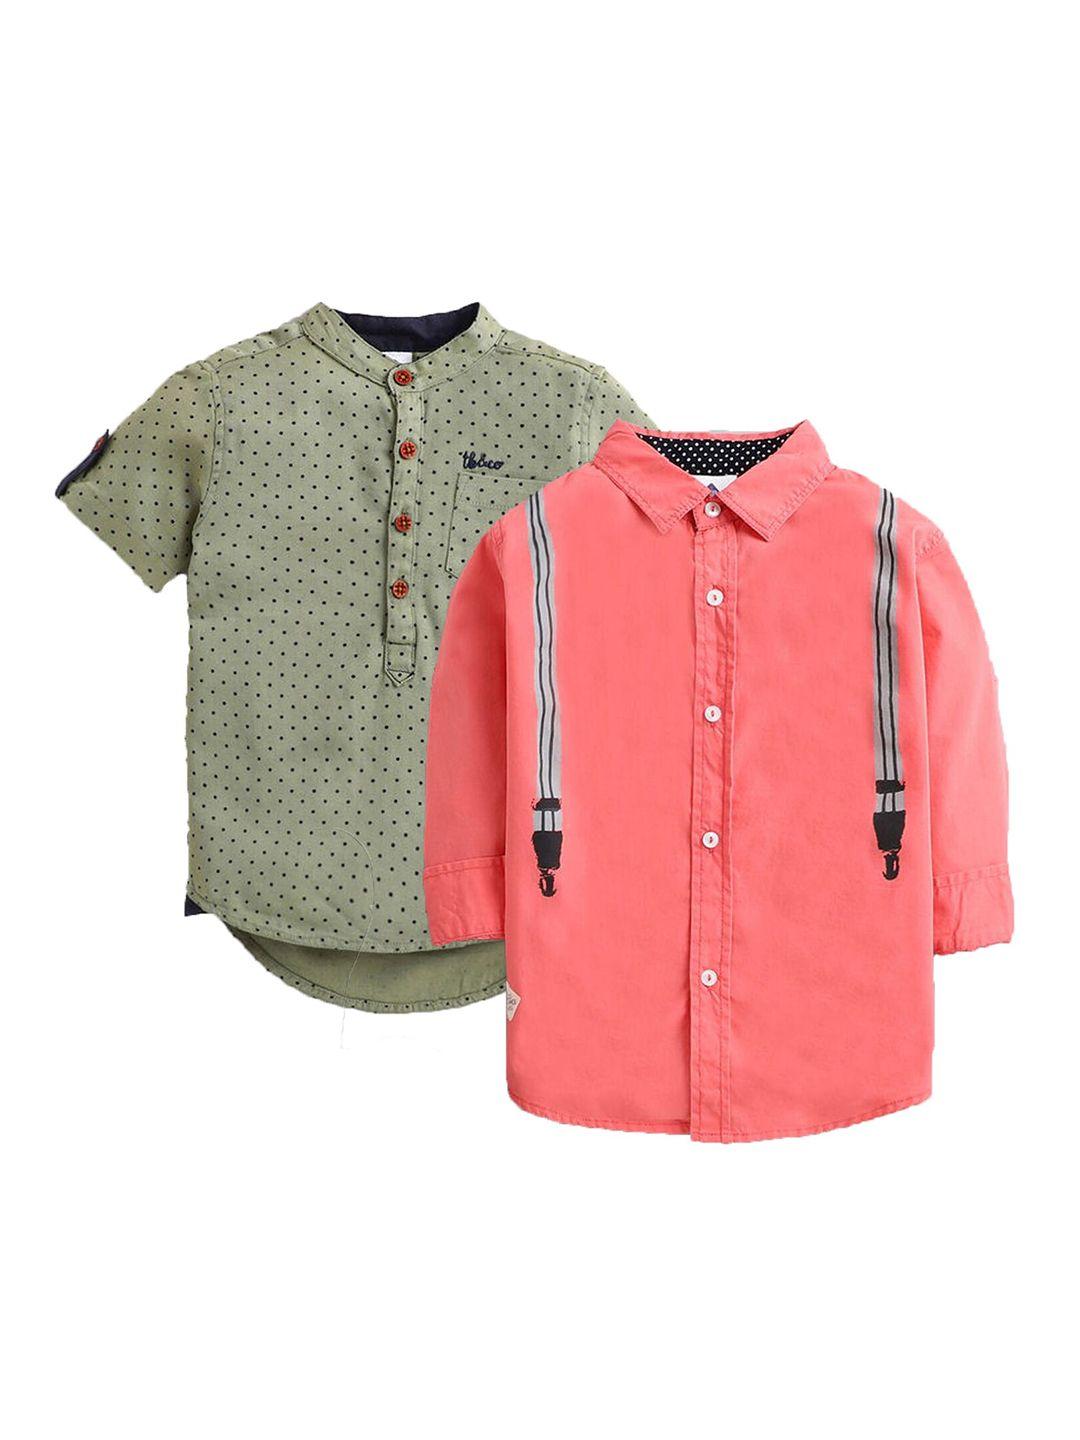 tonyboy boys set of 2 premium printed cotton casual shirts